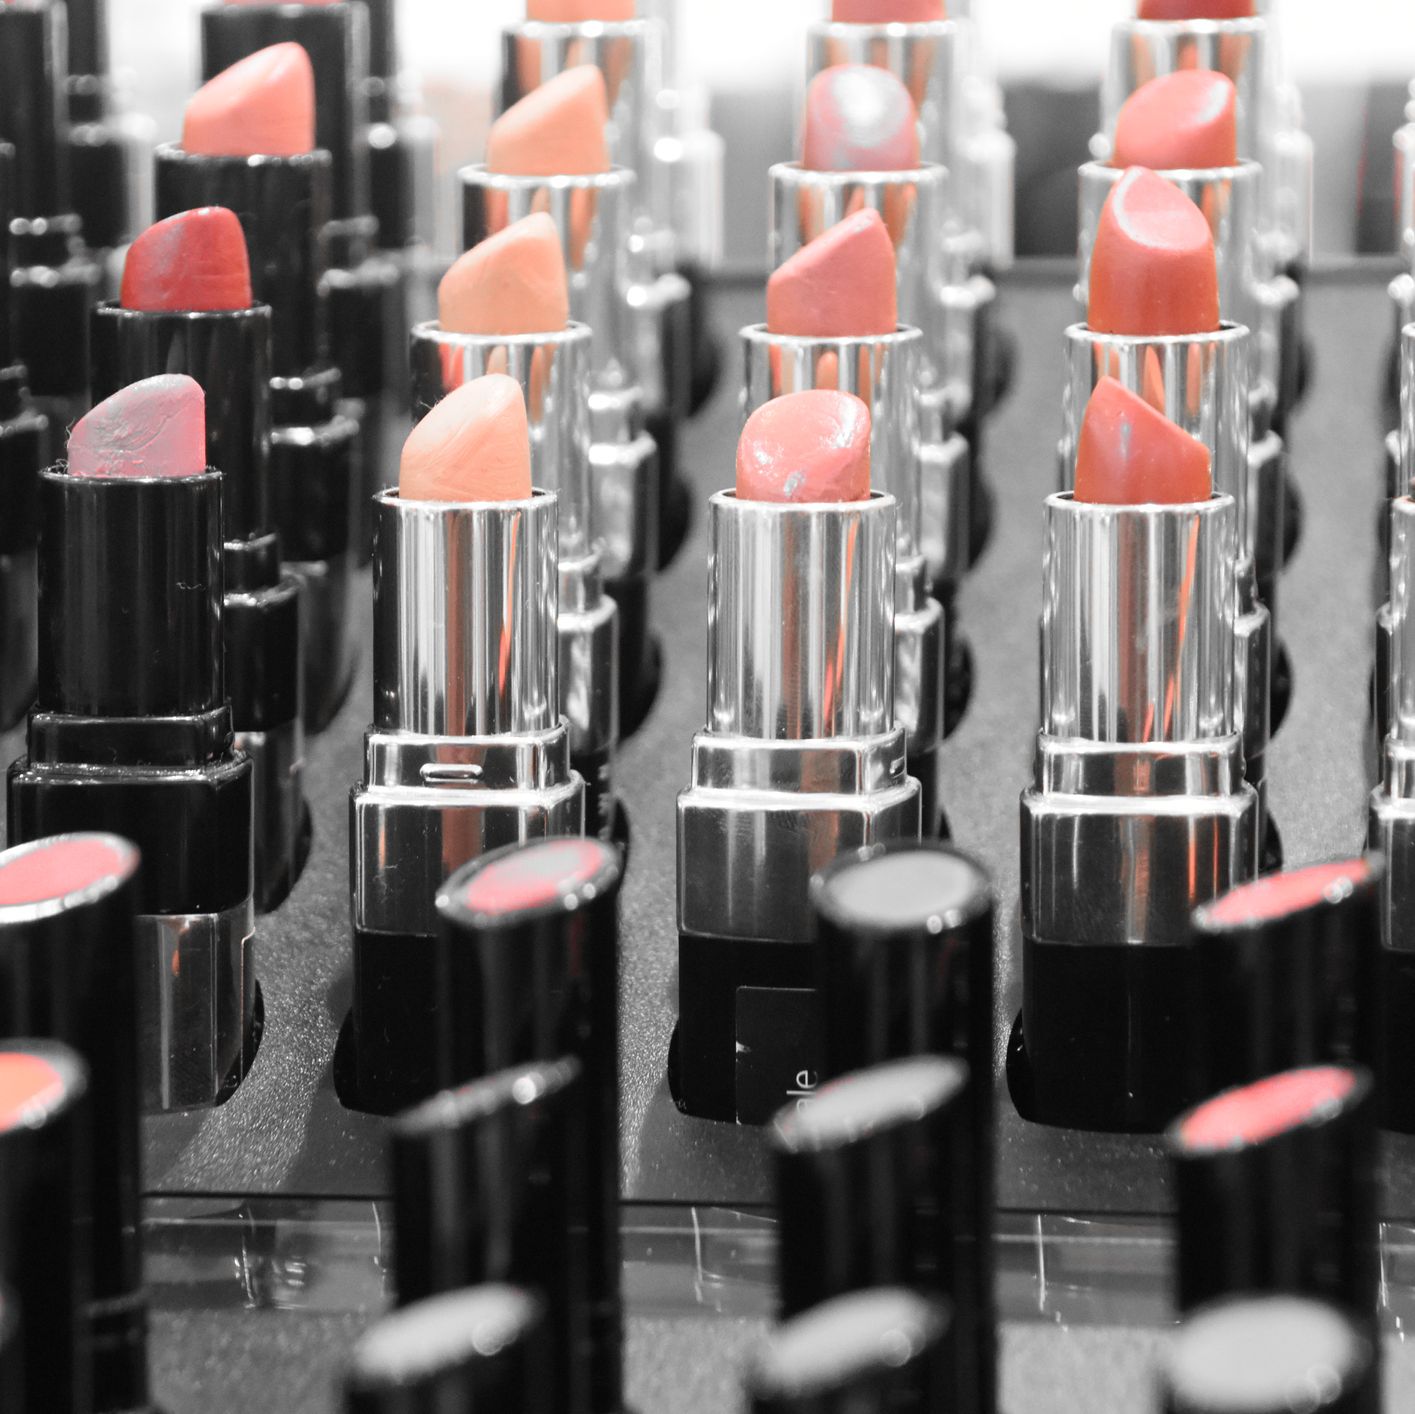 most popular chanel lipstick